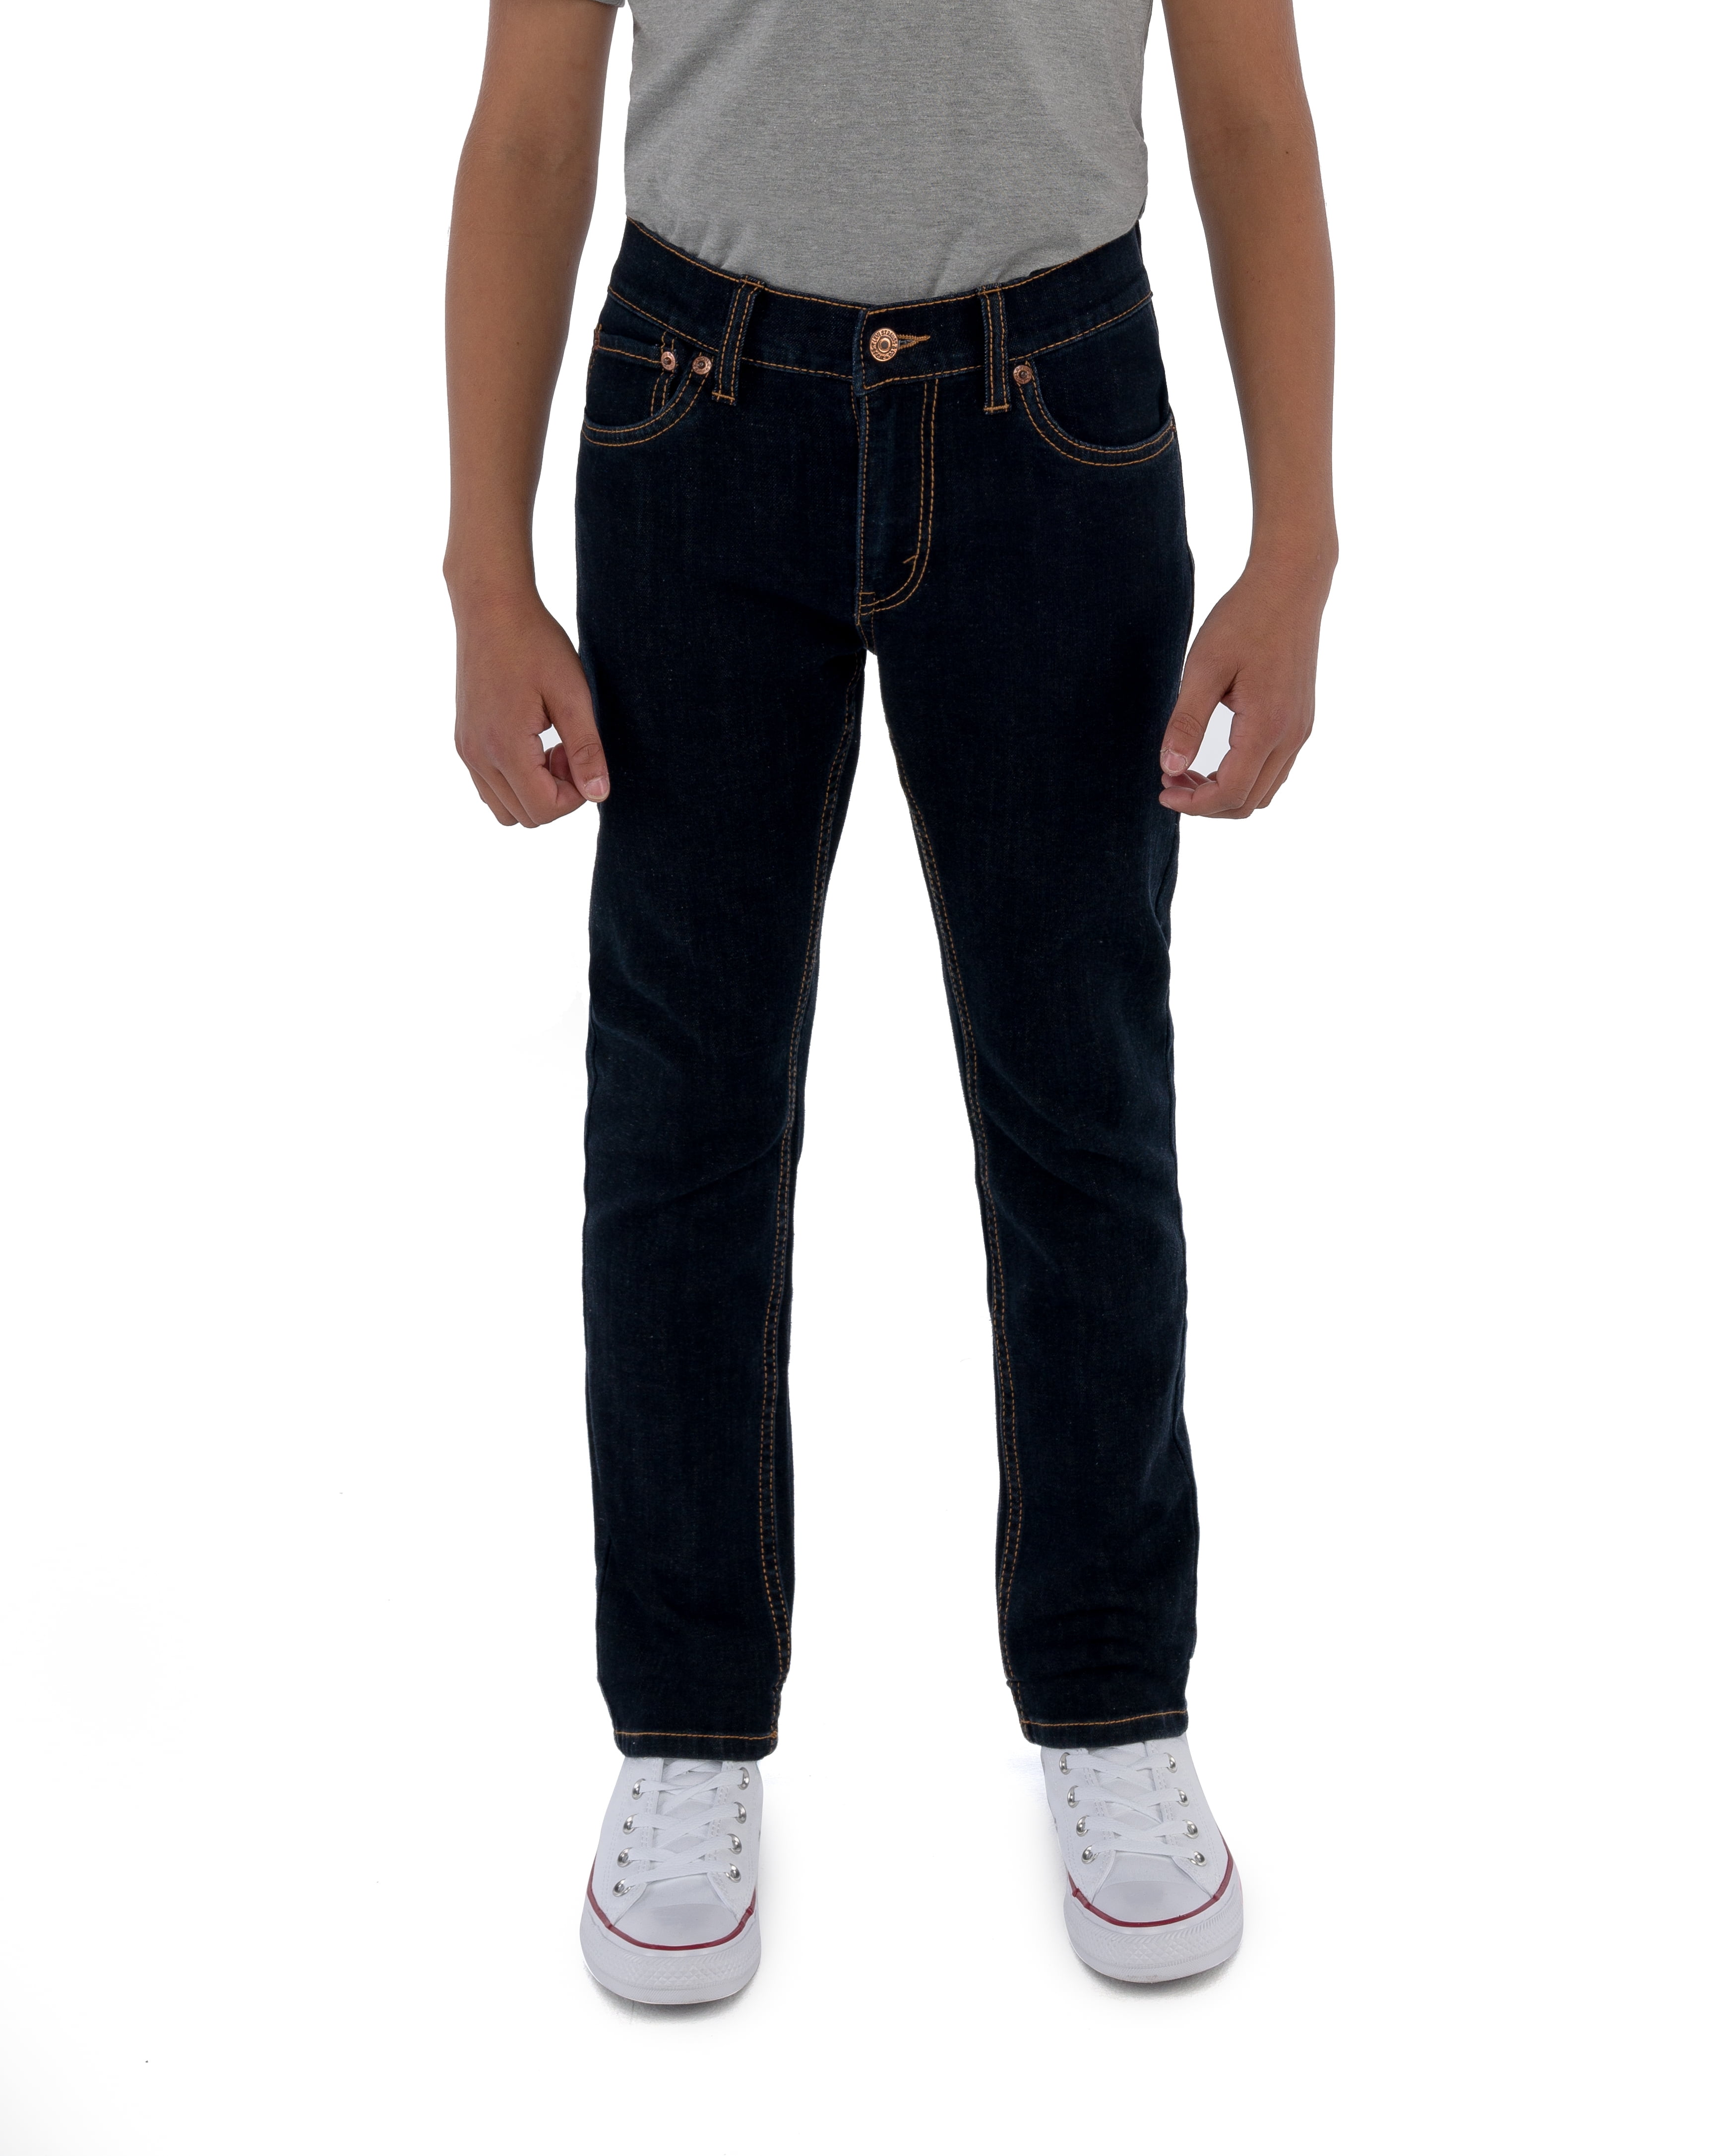 Levi's Boys' 510 Skinny Fit Jeans